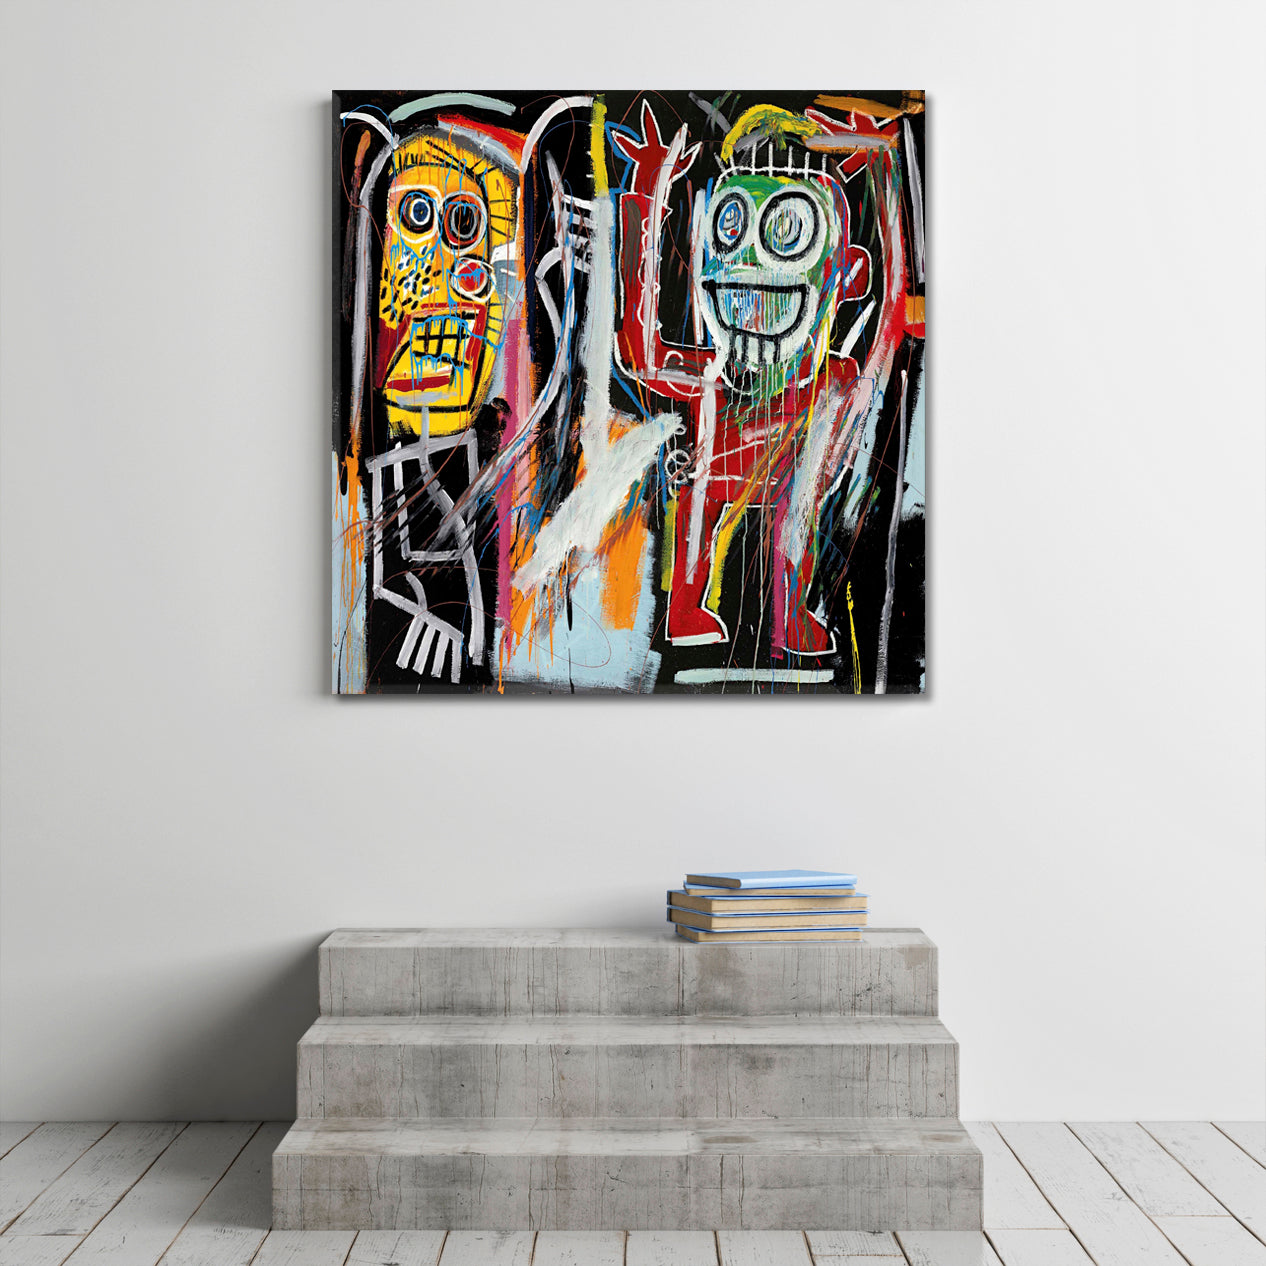 CHAOTIC ENEGY  Jean Basquiat Scull UNTITLED HEAD  Graffiti - Square Panel Contemporary Art Artesty 1 Panel 12"x12" 